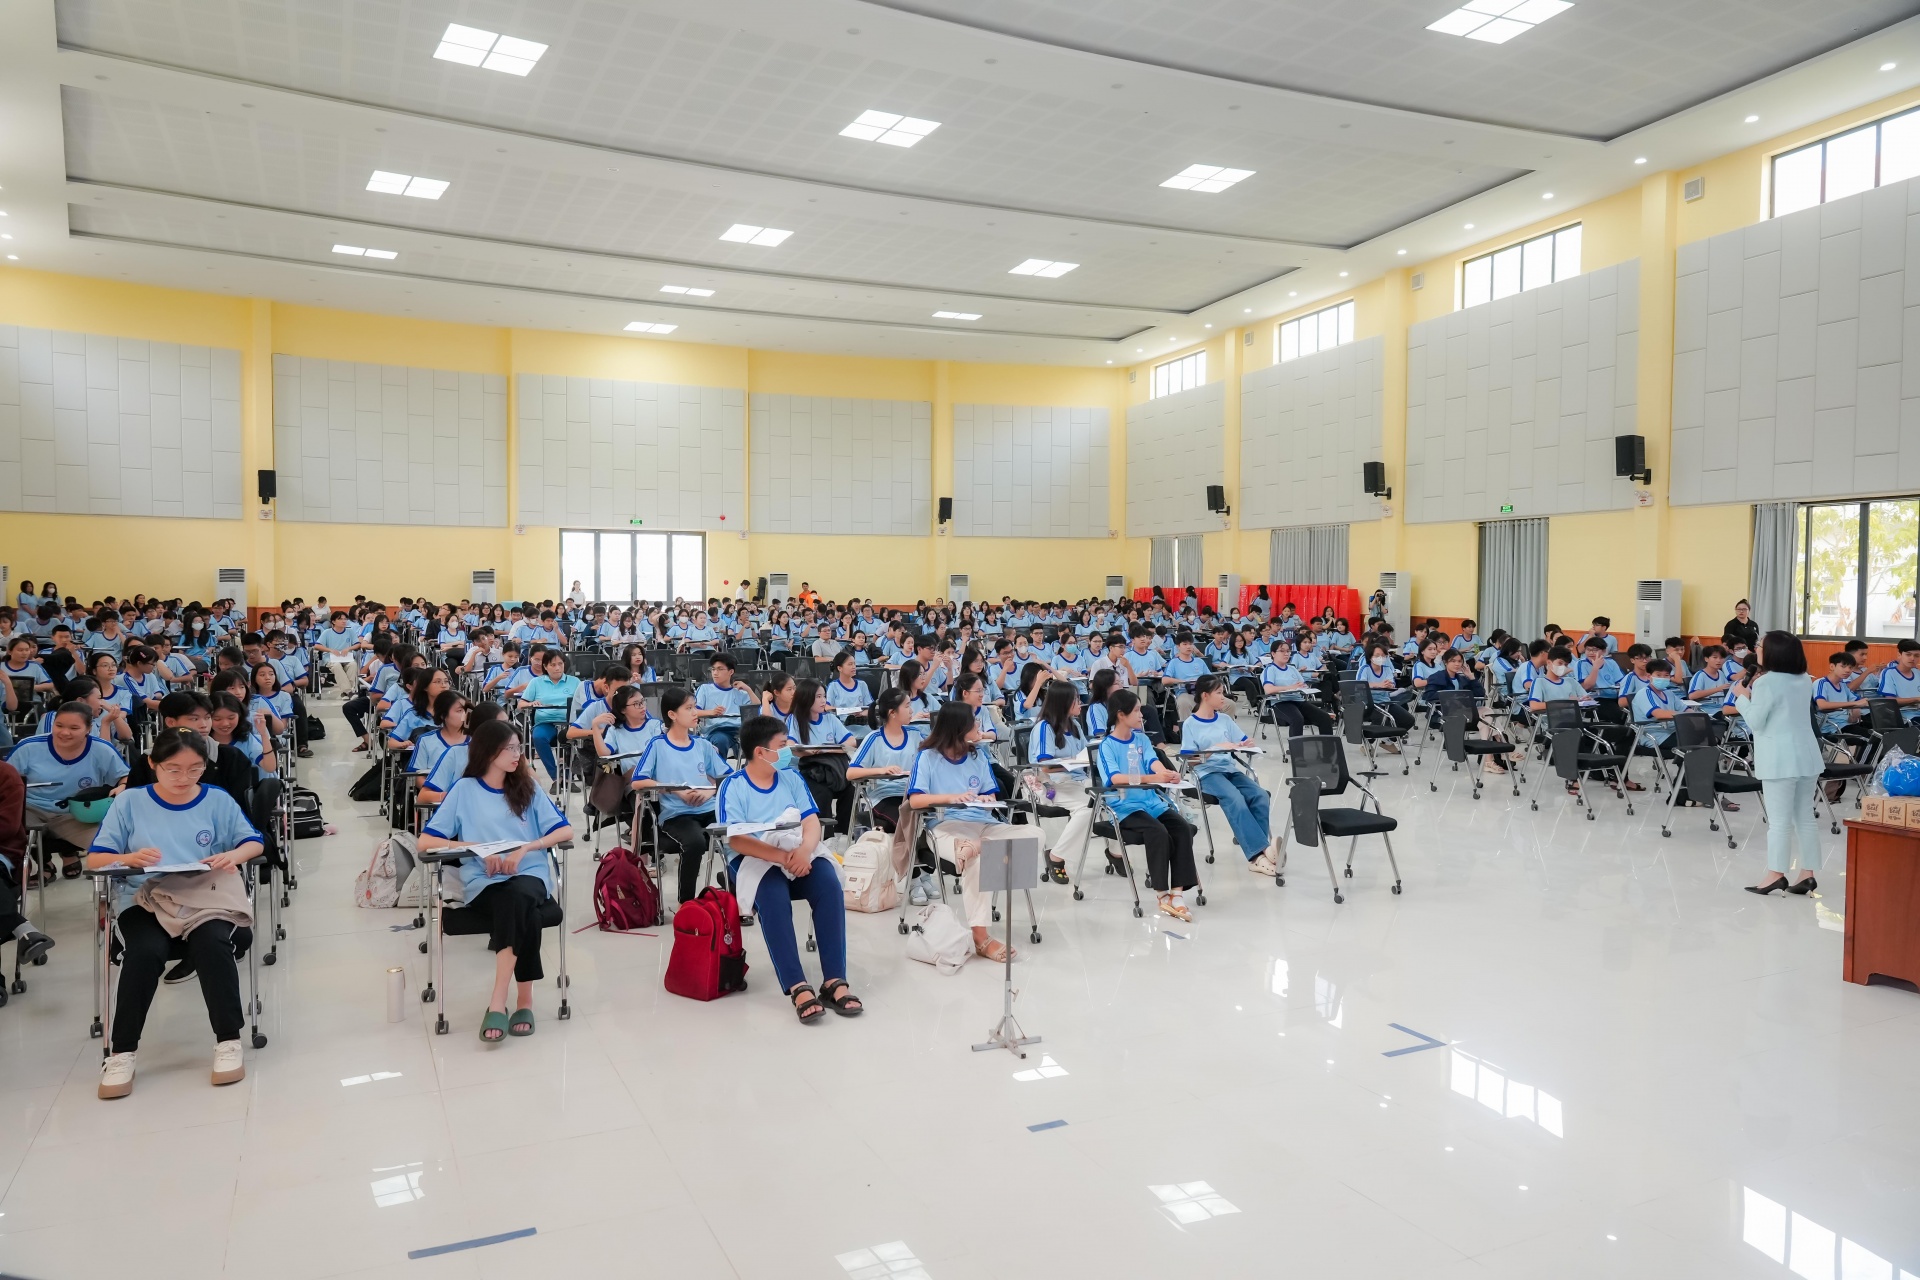 Shinhan Life Vietnam organises career orientation programme for school students